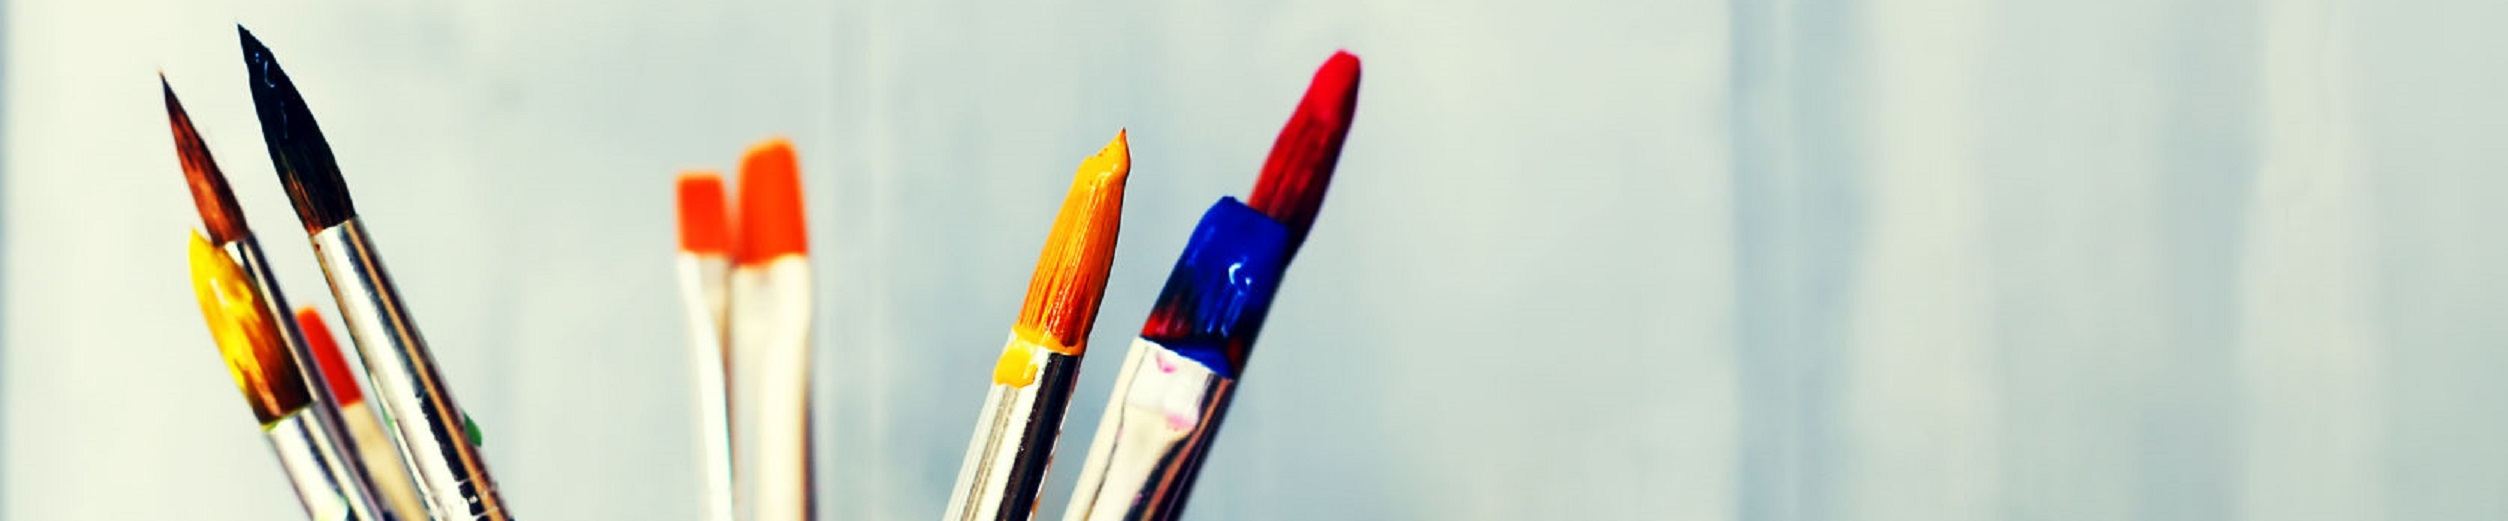 Paintbrushes - Creativity Quotes